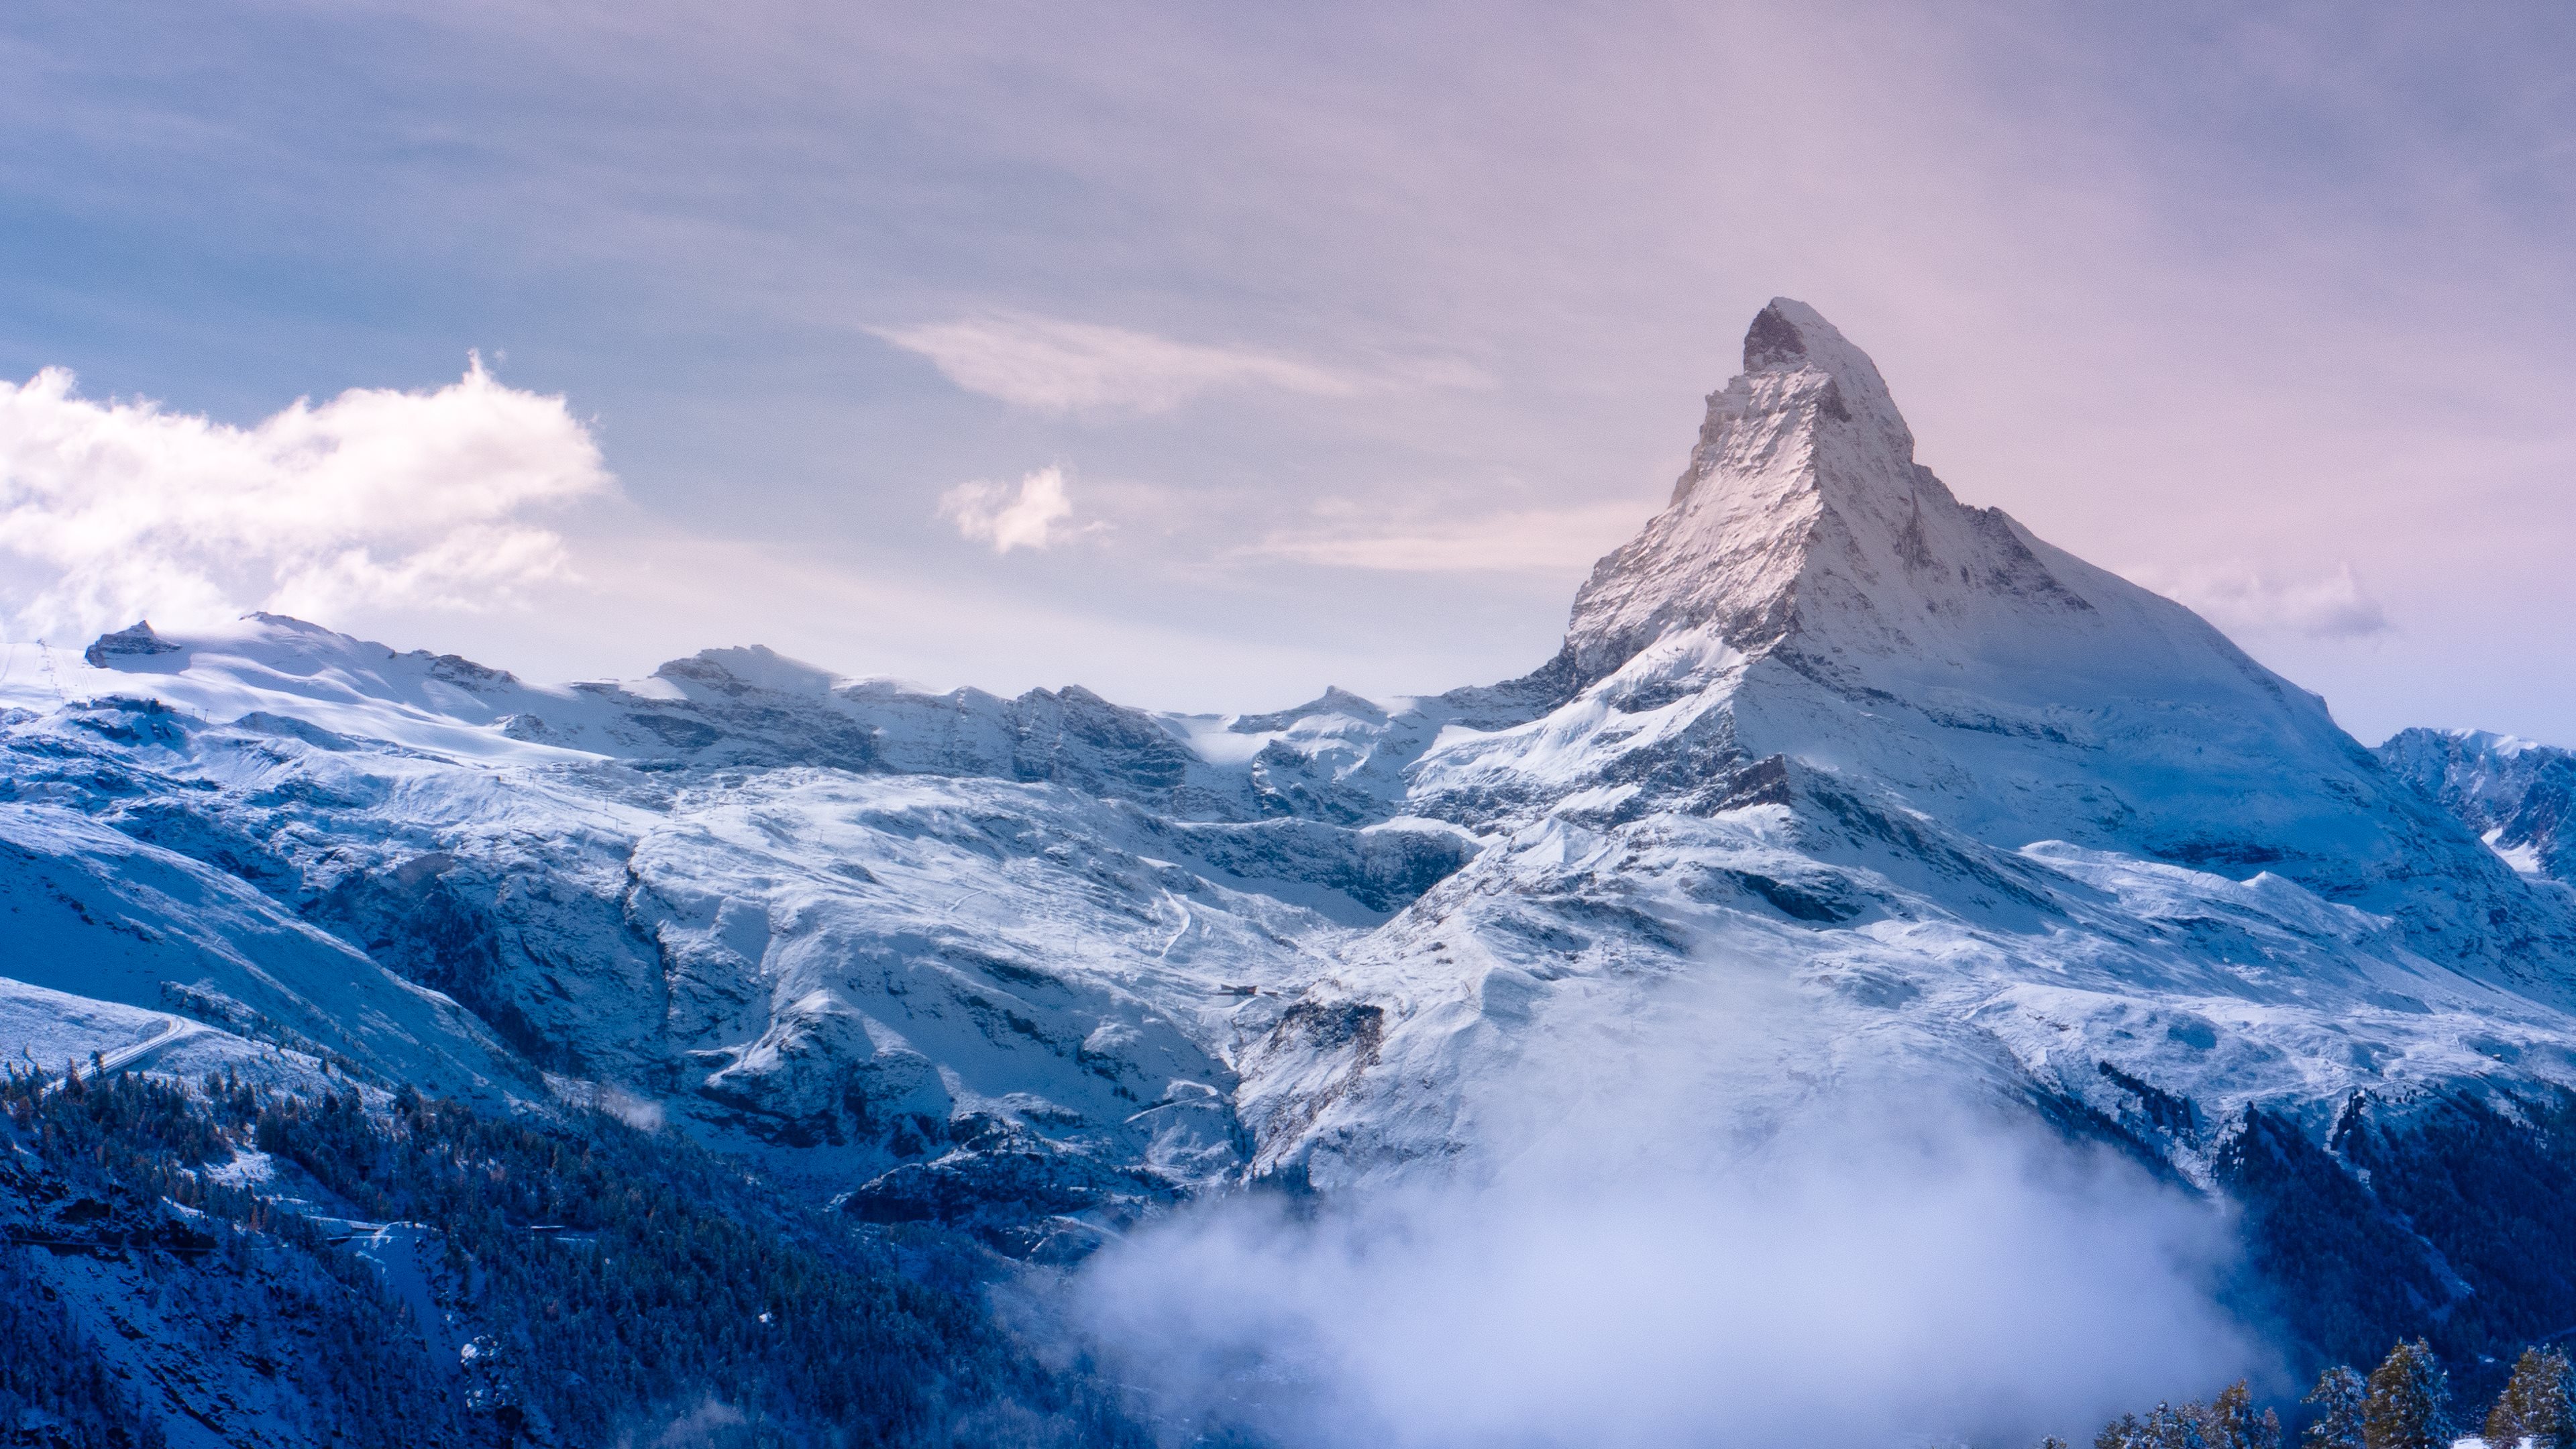 Mountain 4k Ultra HD Wallpaper | Background Image | 3840x2160